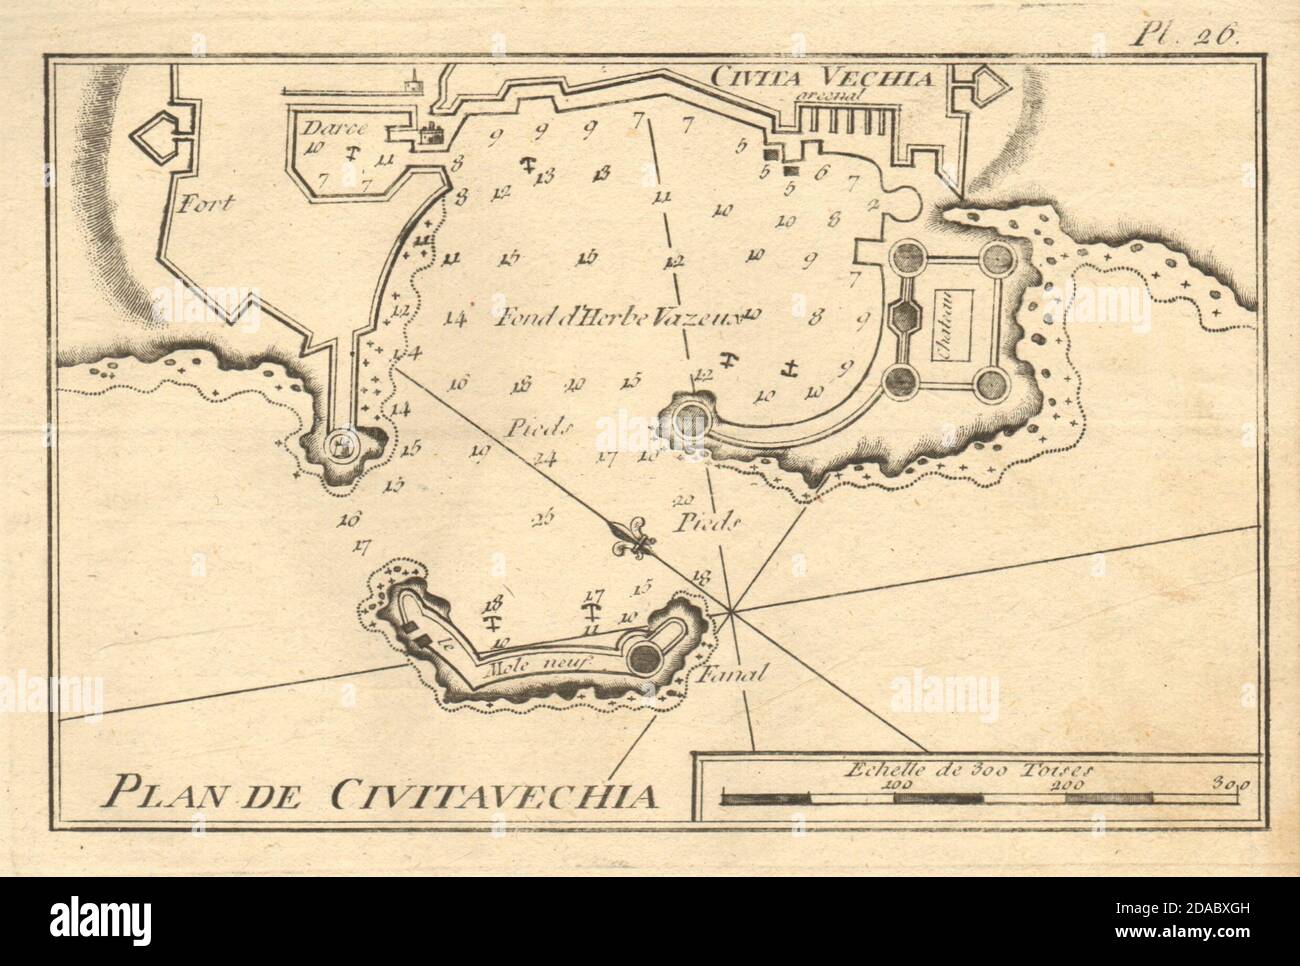 Plan de Civitavechia. Plano del puerto de Civitavecchia. Italia. Mapa DE ROUX 1804 Foto de stock